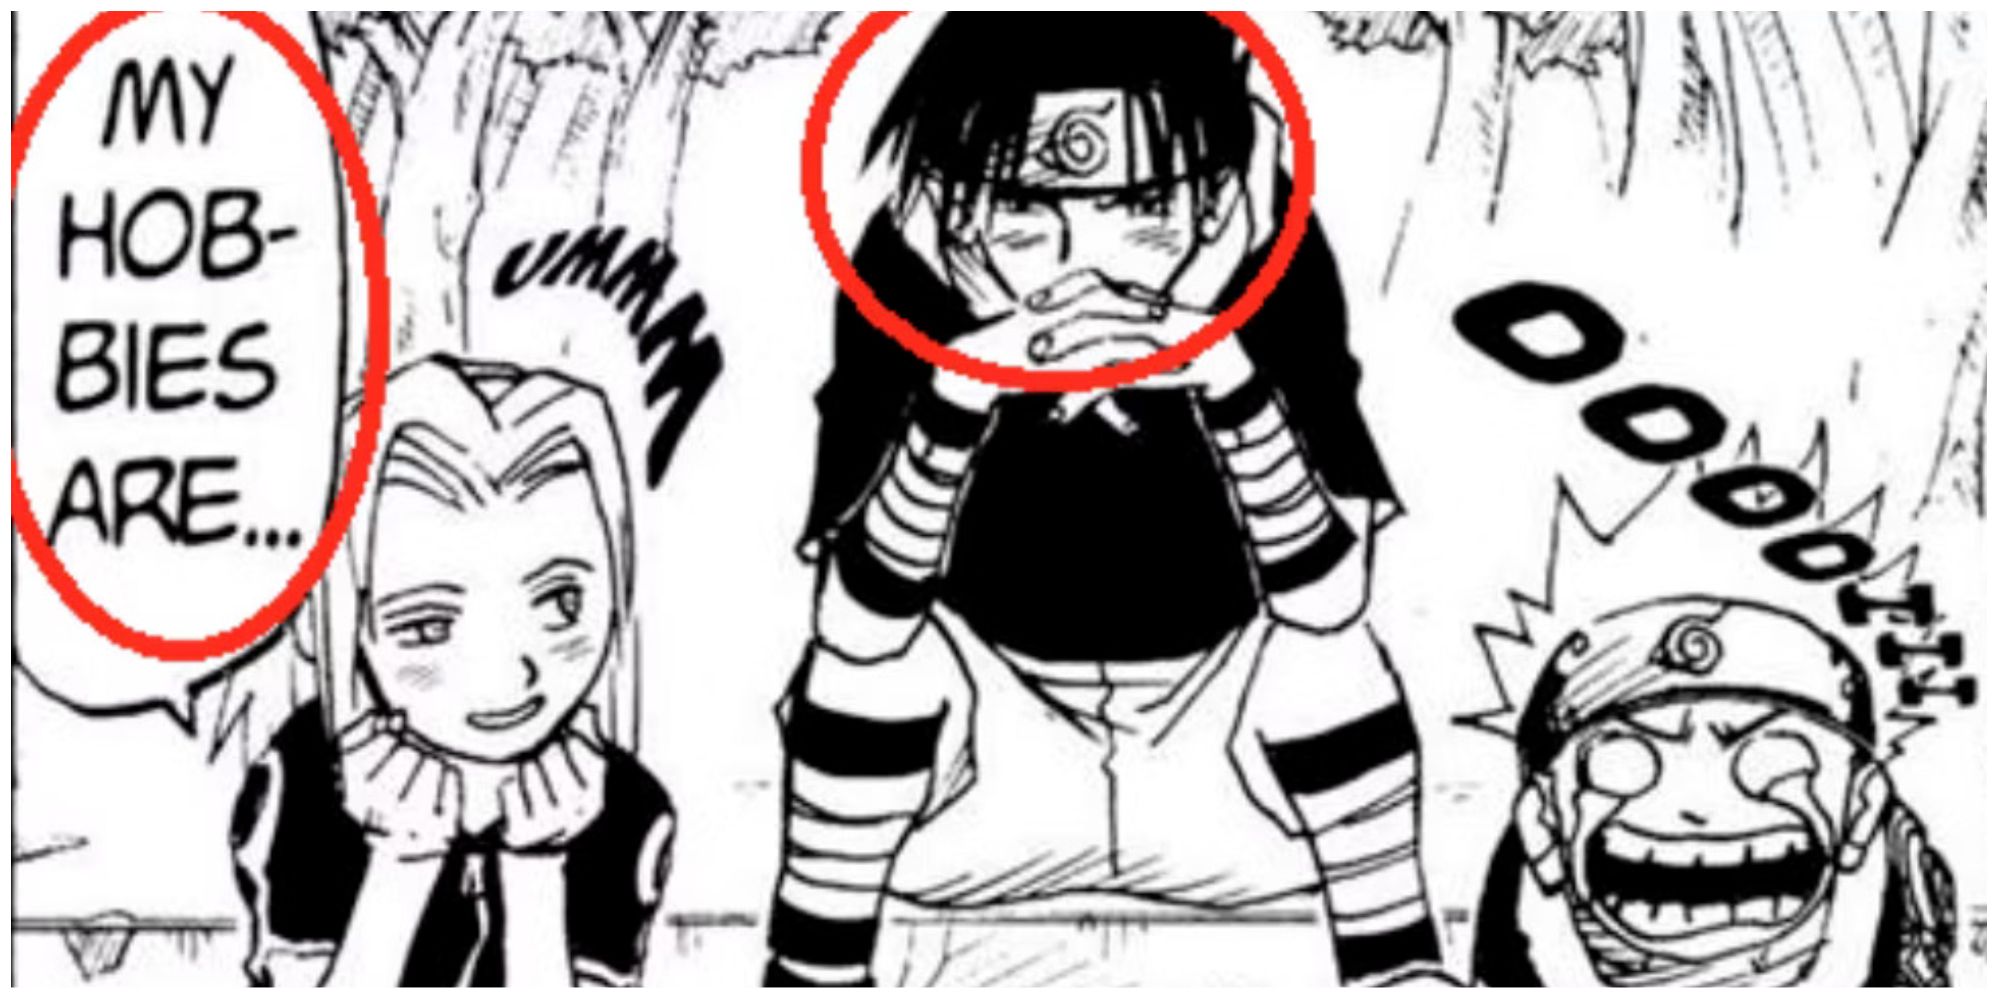 Sakura, Sasuke, and Naruto from the Naruto manga.